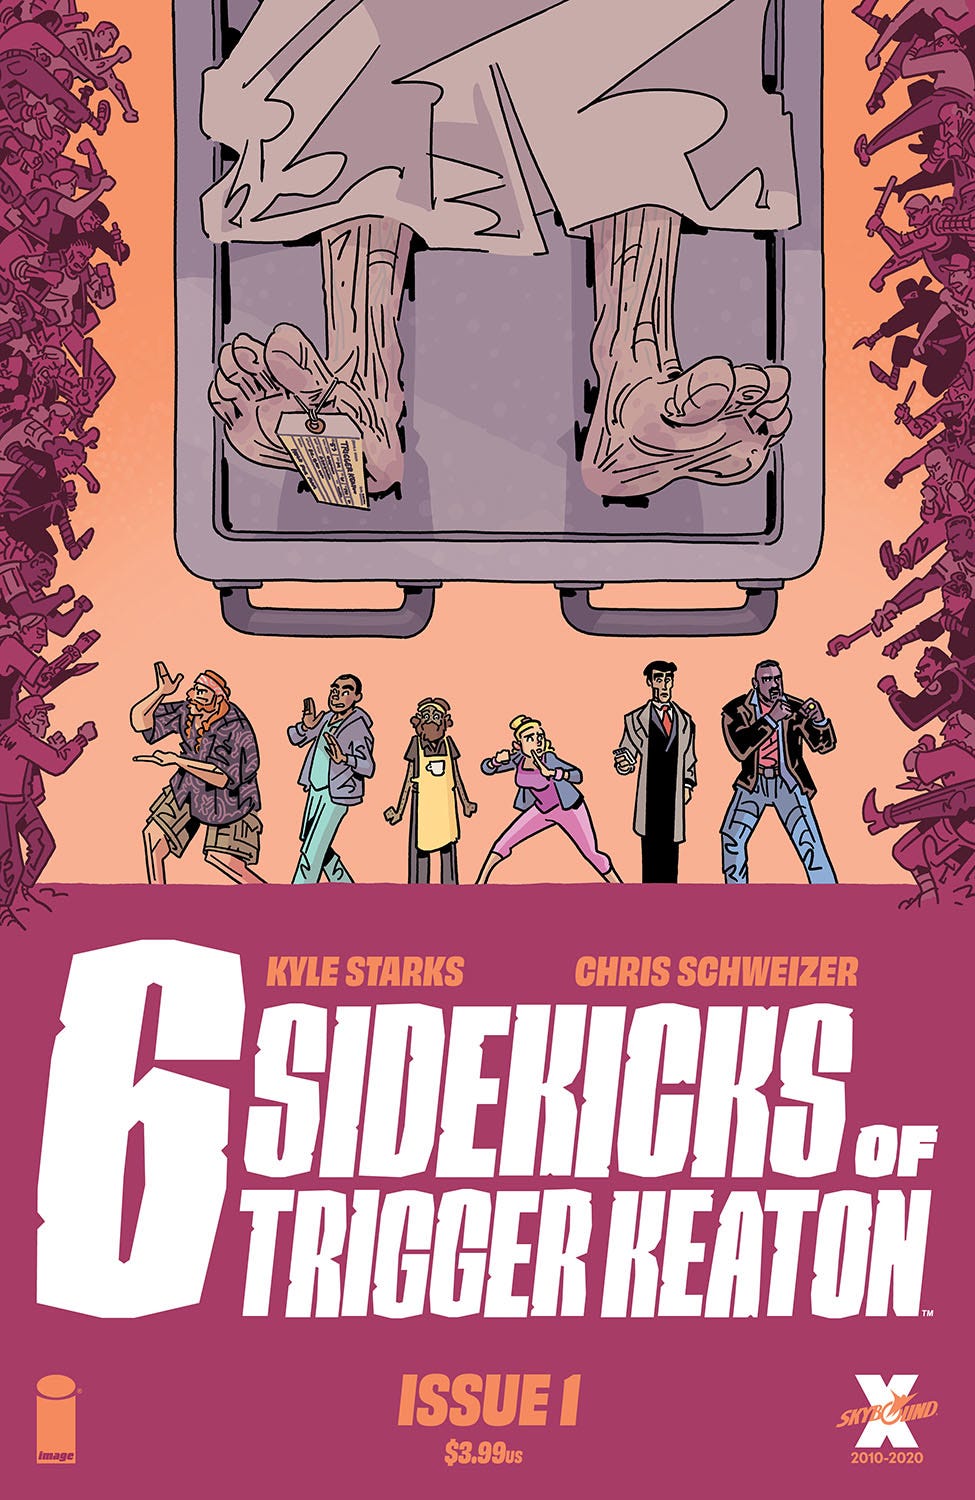 Six Sidekicks of Triggered Keaton #1 (Cover A - Schweizer)